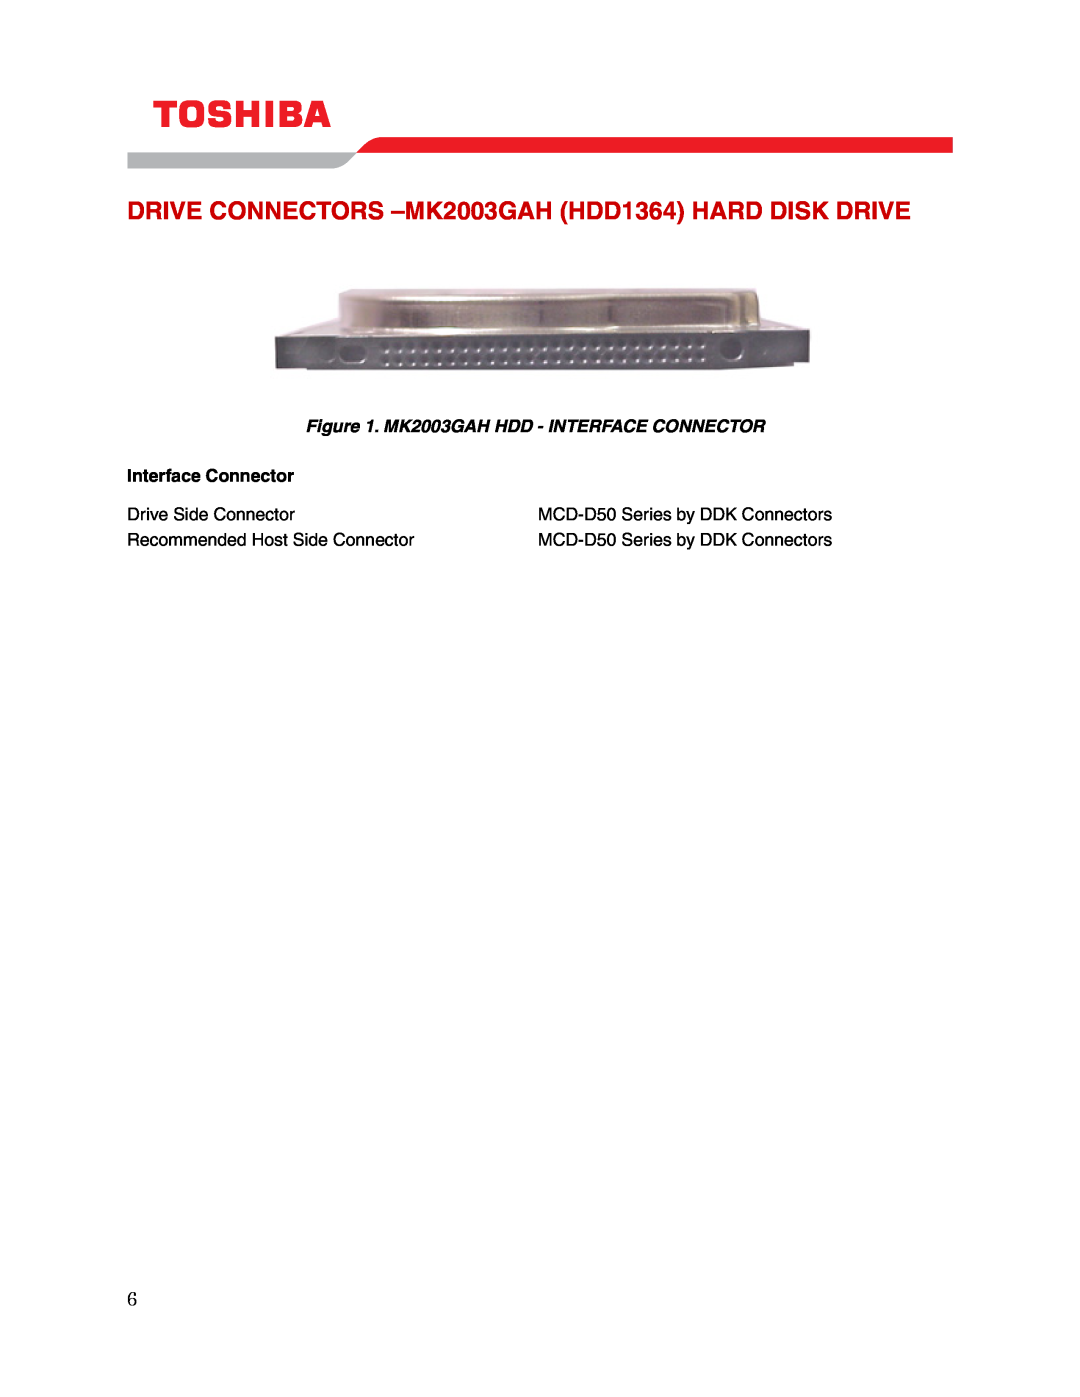 Toshiba DRIVE CONNECTORS -MK2003GAH HDD1364 HARD DISK DRIVE, MK2003GAH HDD - INTERFACE CONNECTOR, Interface Connector 